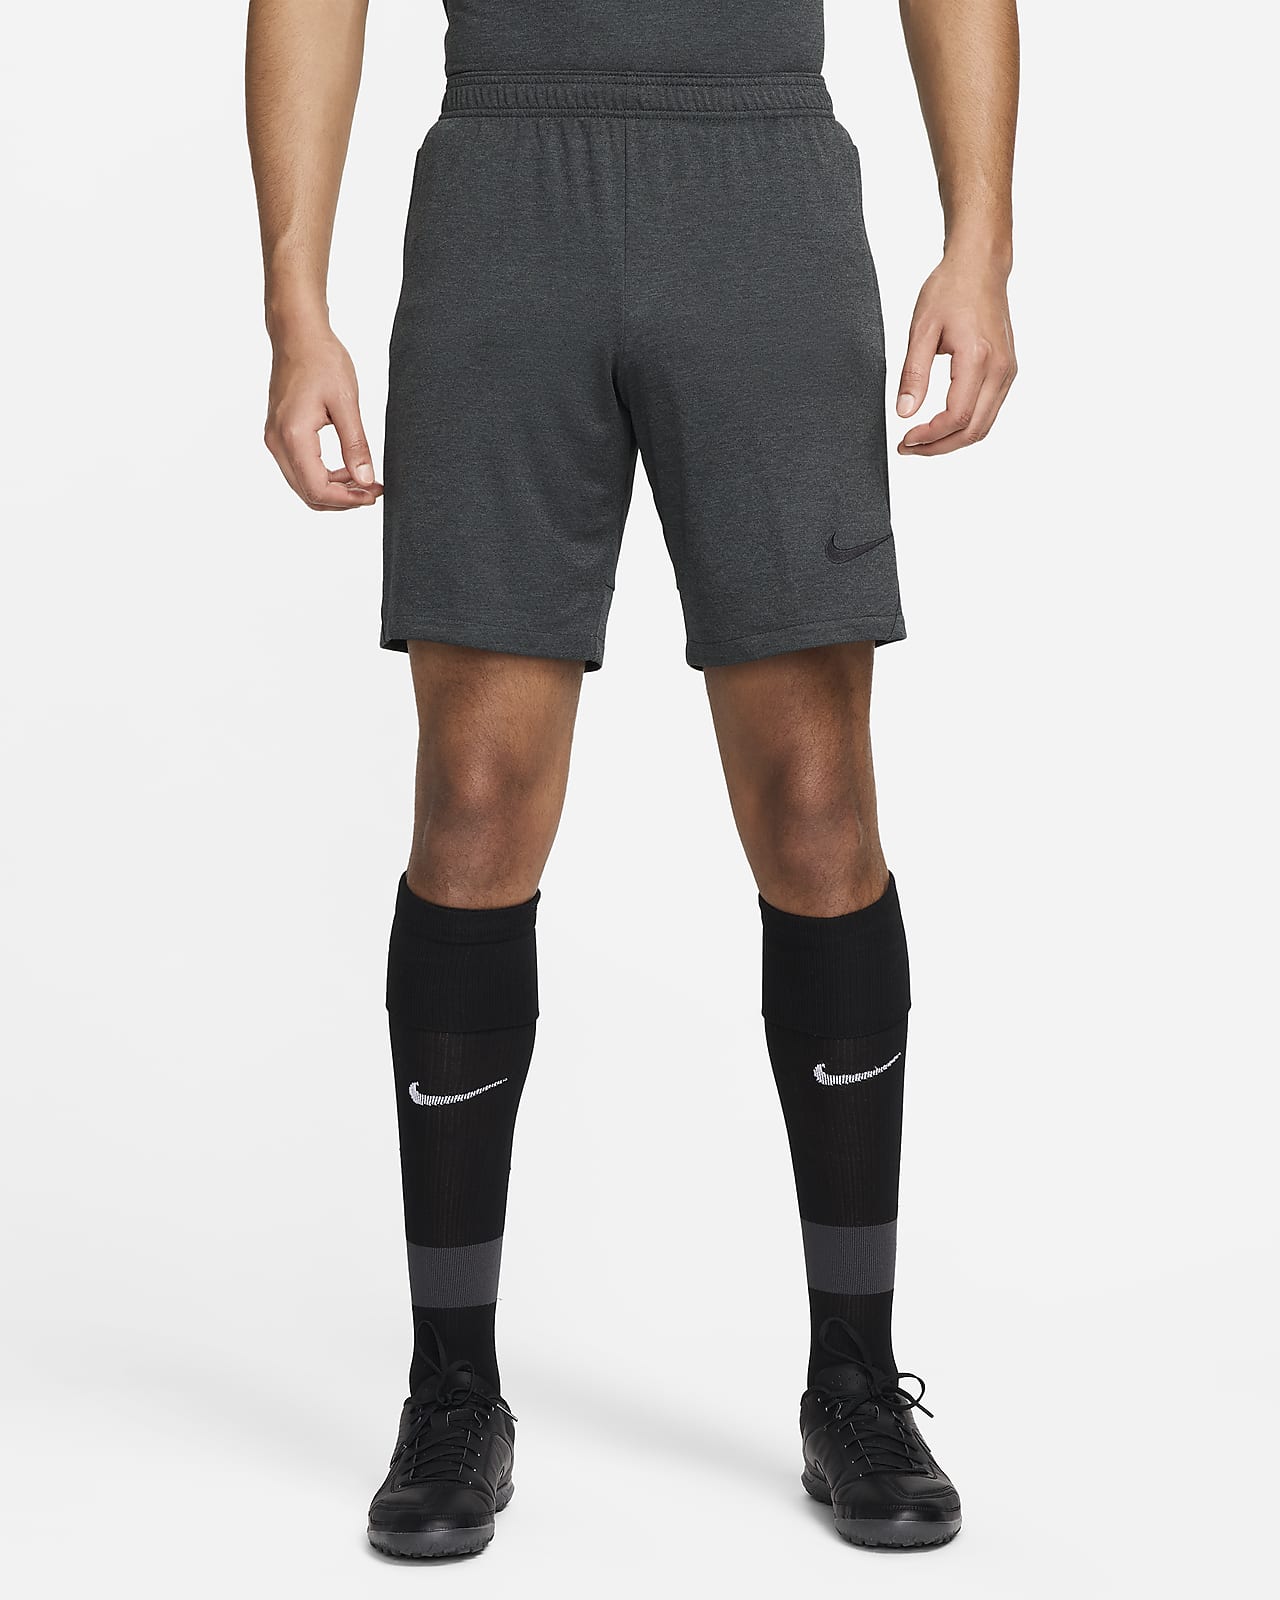 Shorts de fútbol Dri-FIT para hombre Nike Academy